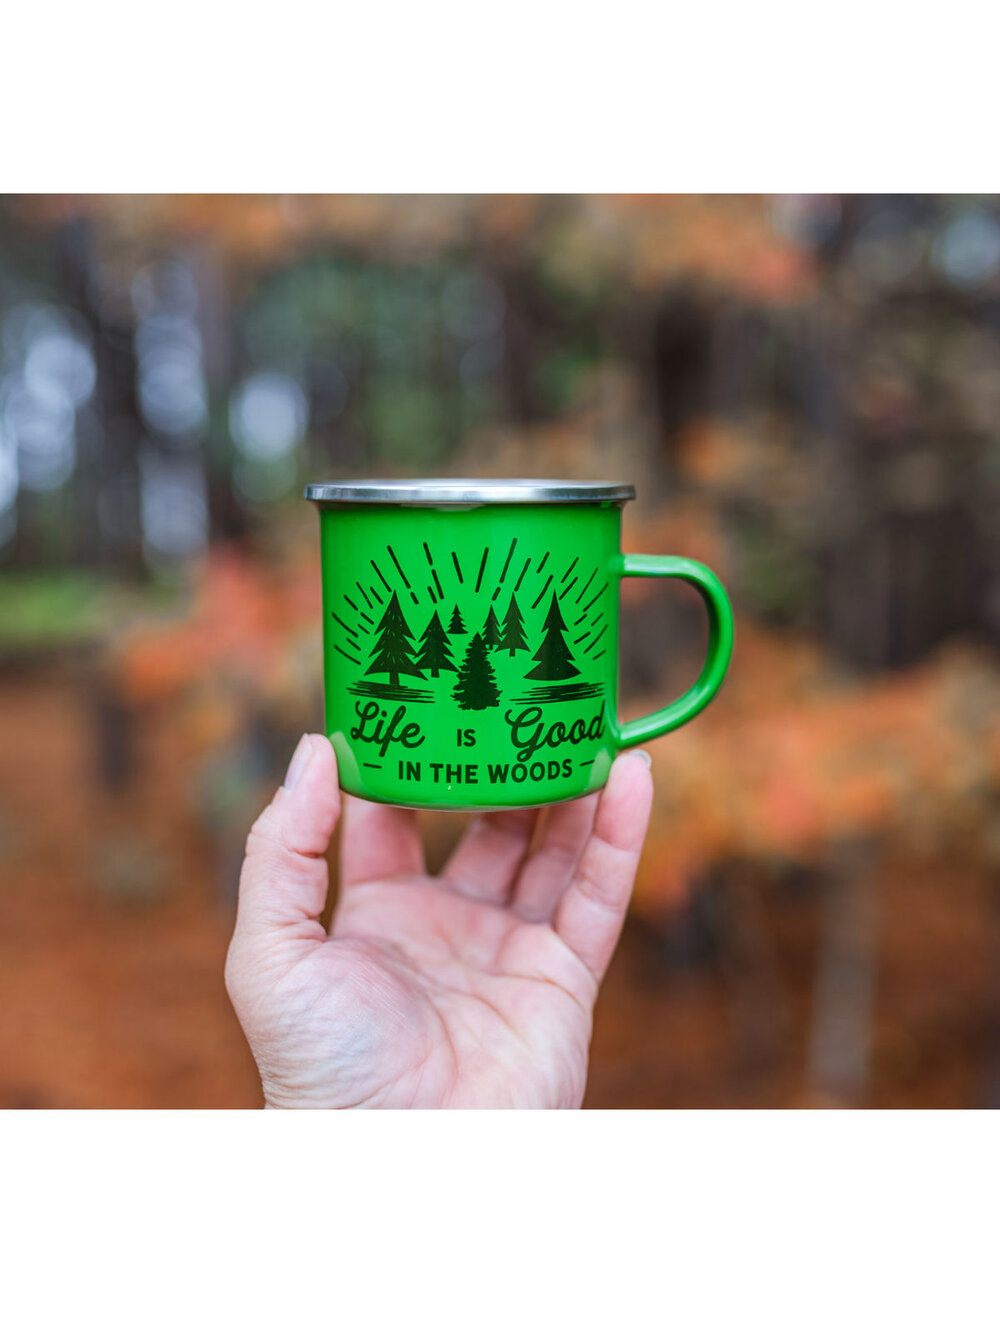 Camp Life Camp Mug